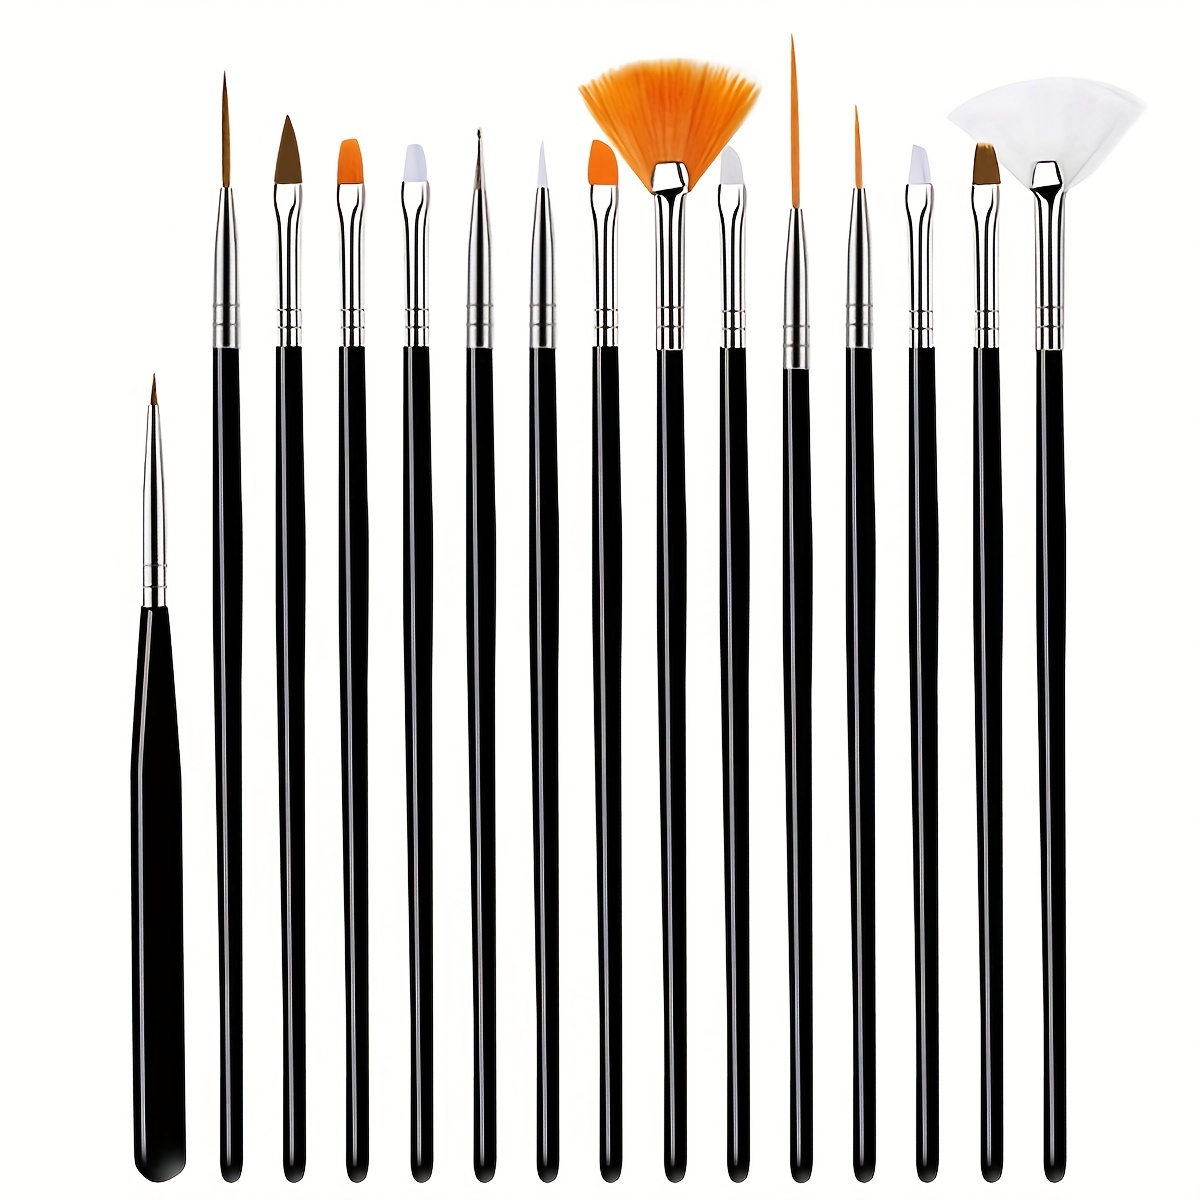 

15pcs Fine Detail Paint Brush Set - Miniature Paint Brush For Detailing & Art Painting - Acrylic, Watercolor, Oil, Models, Airplane Kits, Nail Artist Supplies